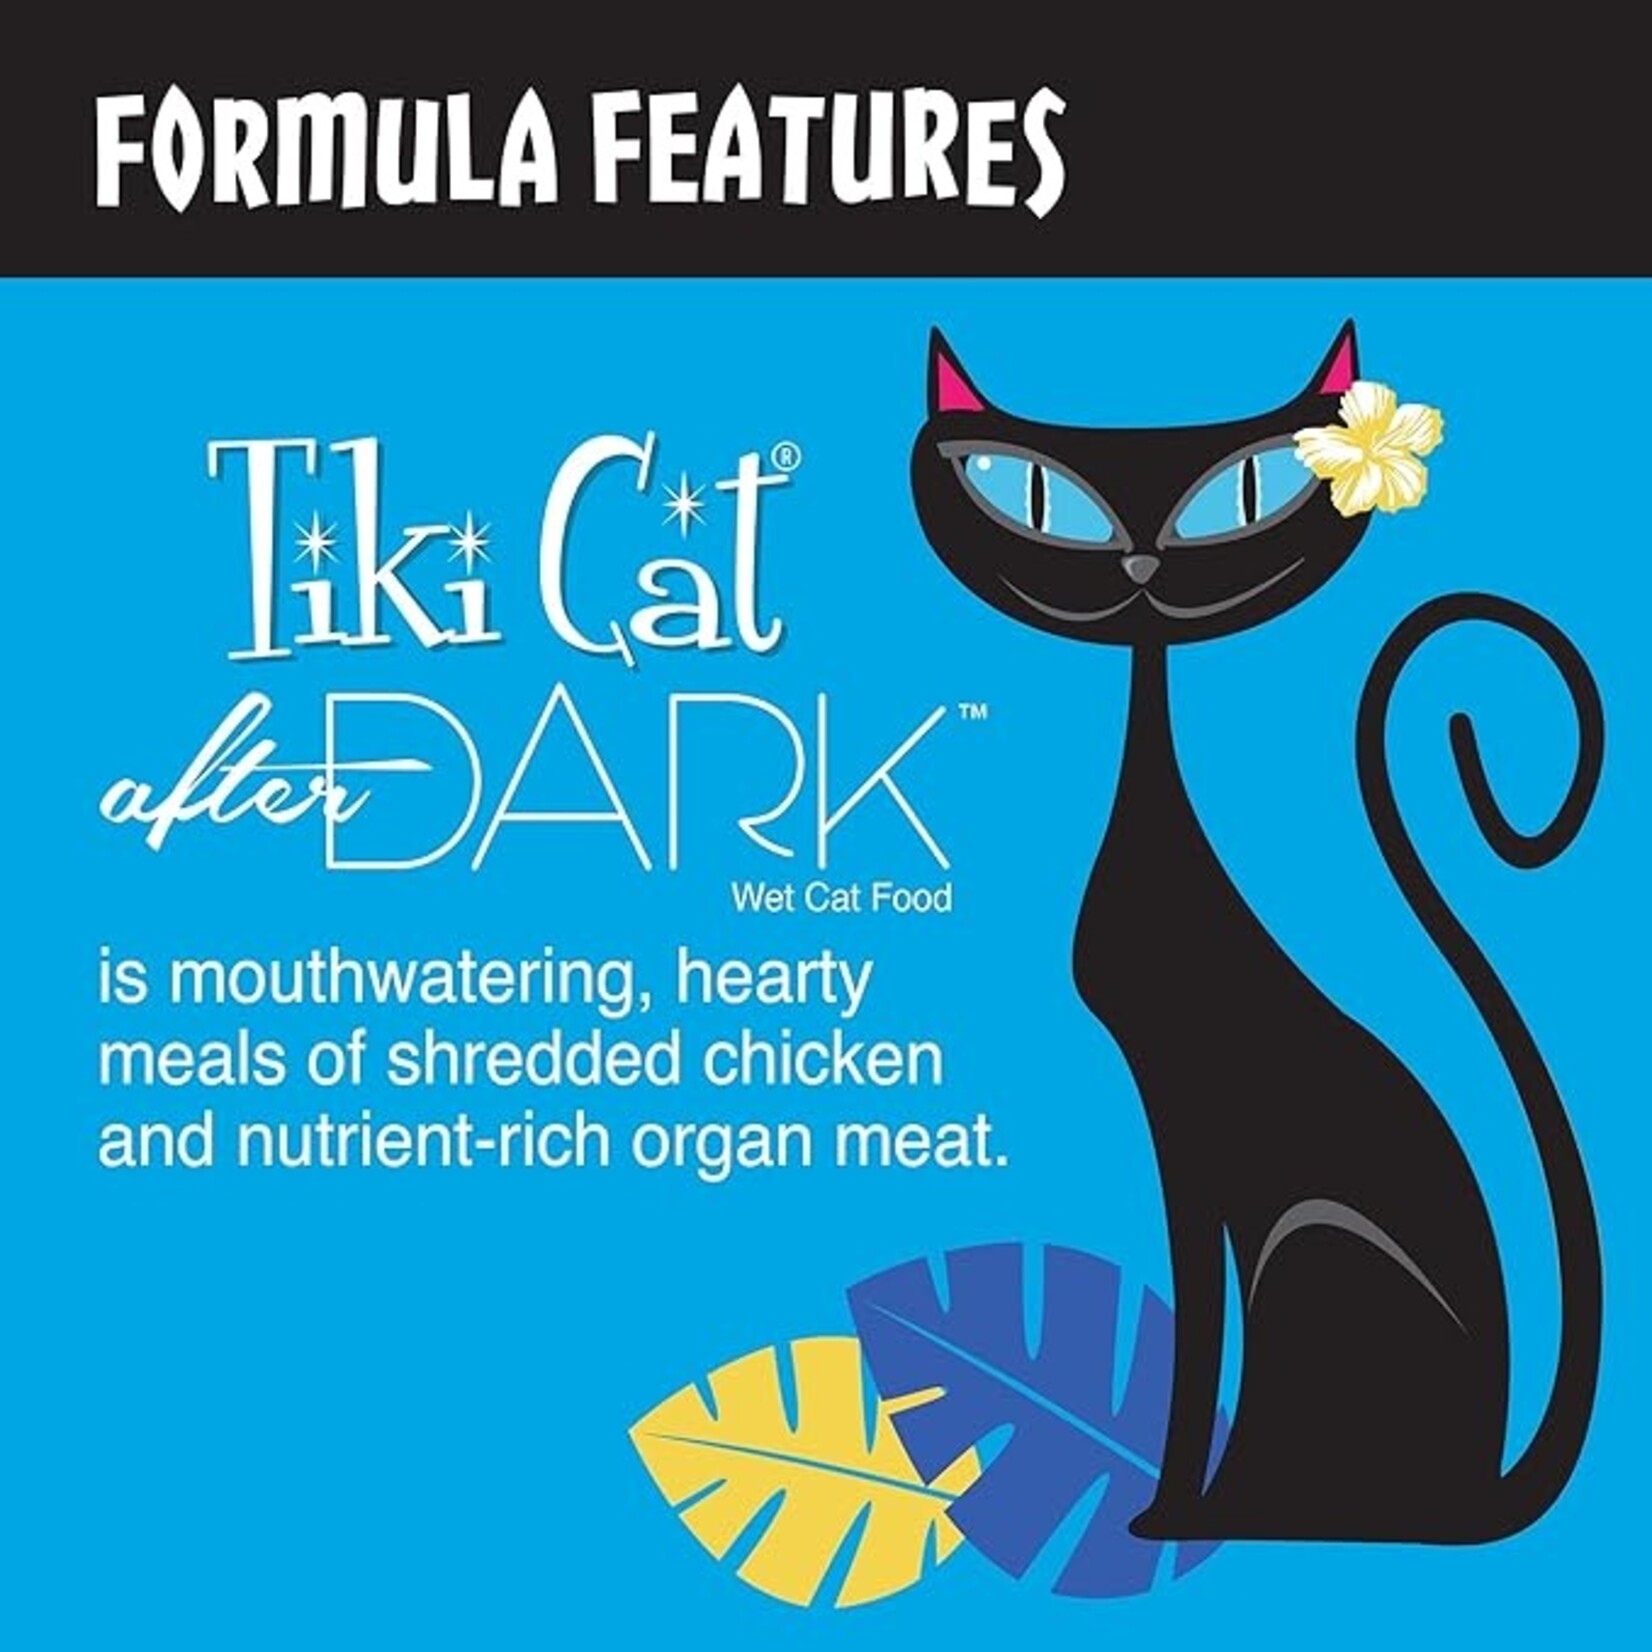 Tiki Cat Tiki Cat After Dark Chicken & Quail 2.8oz